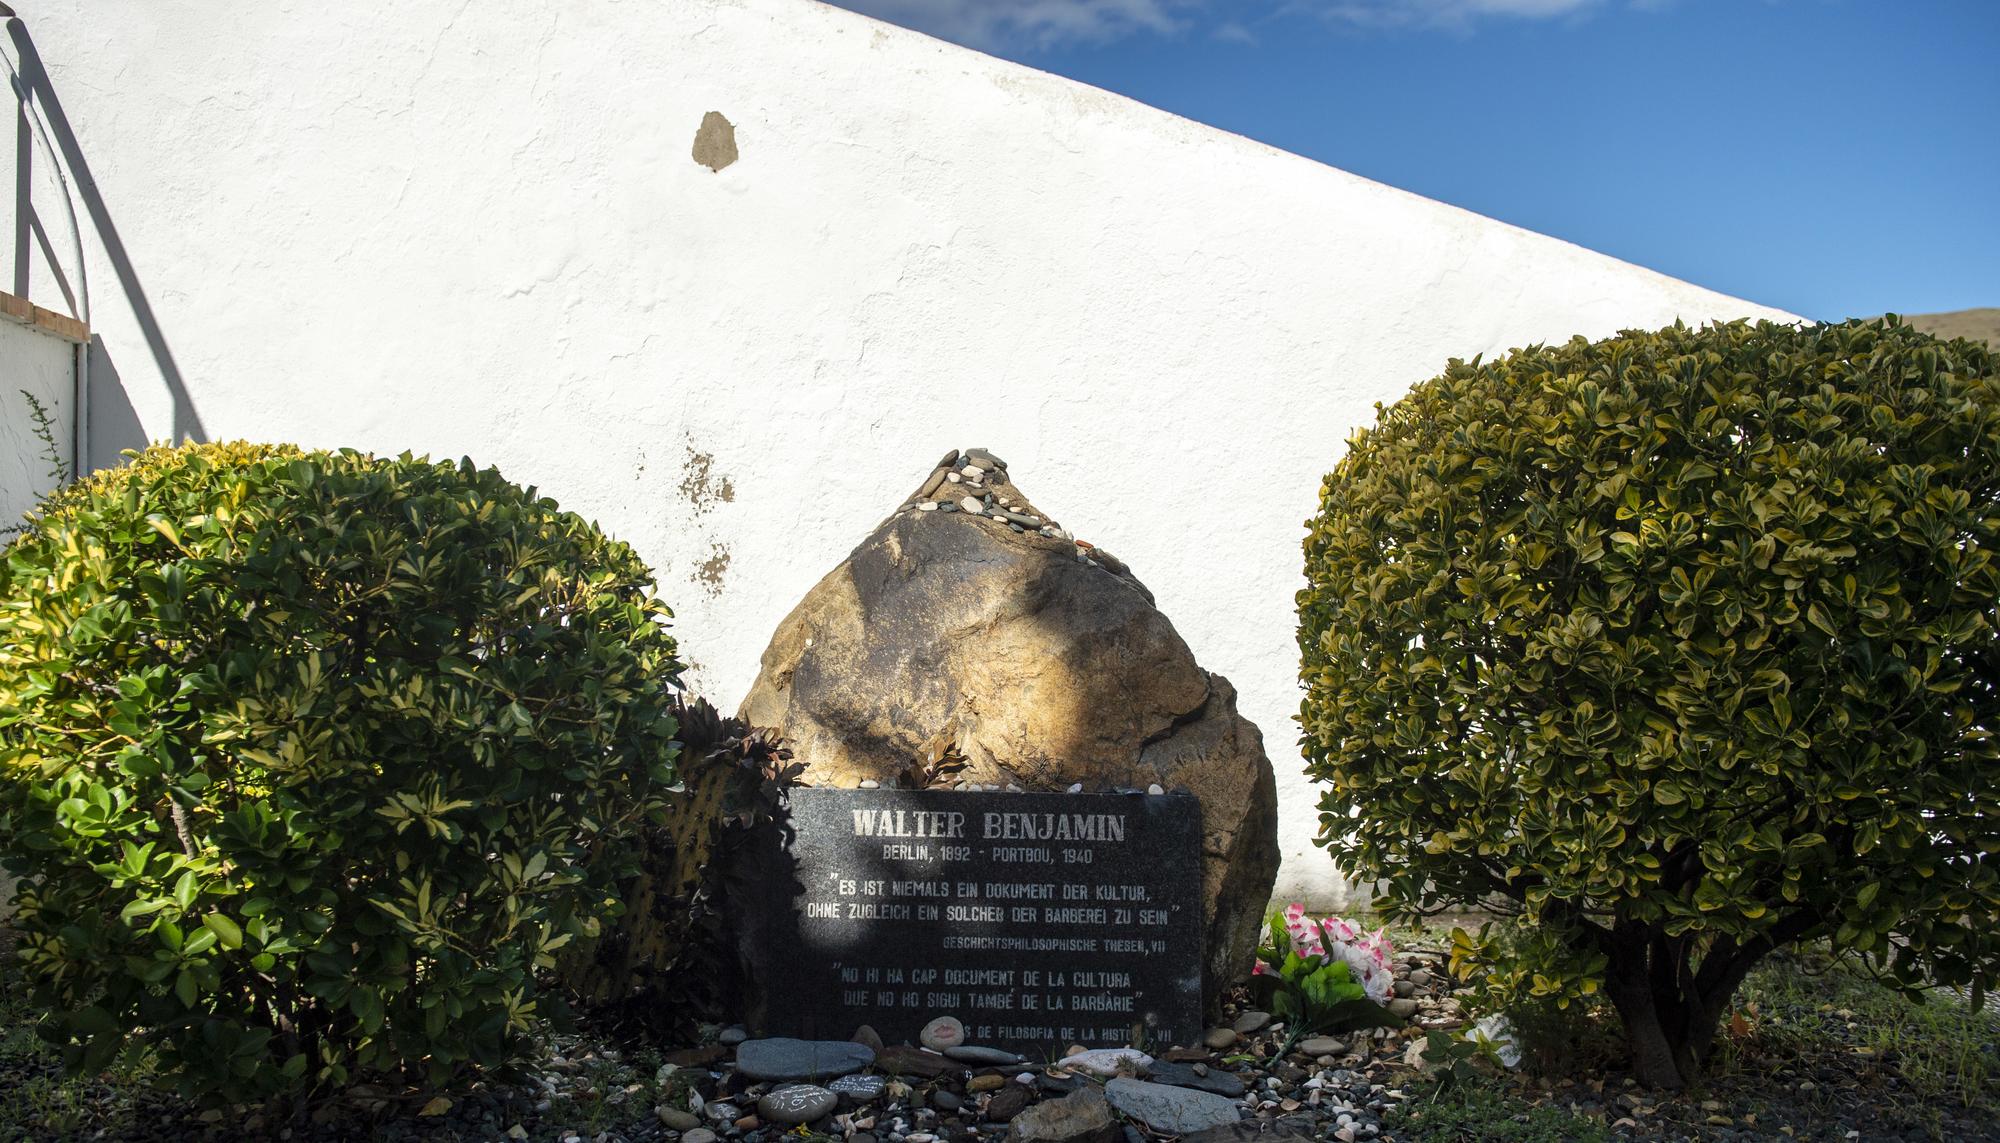 Walter Benjamin tumba cementerio Portbou